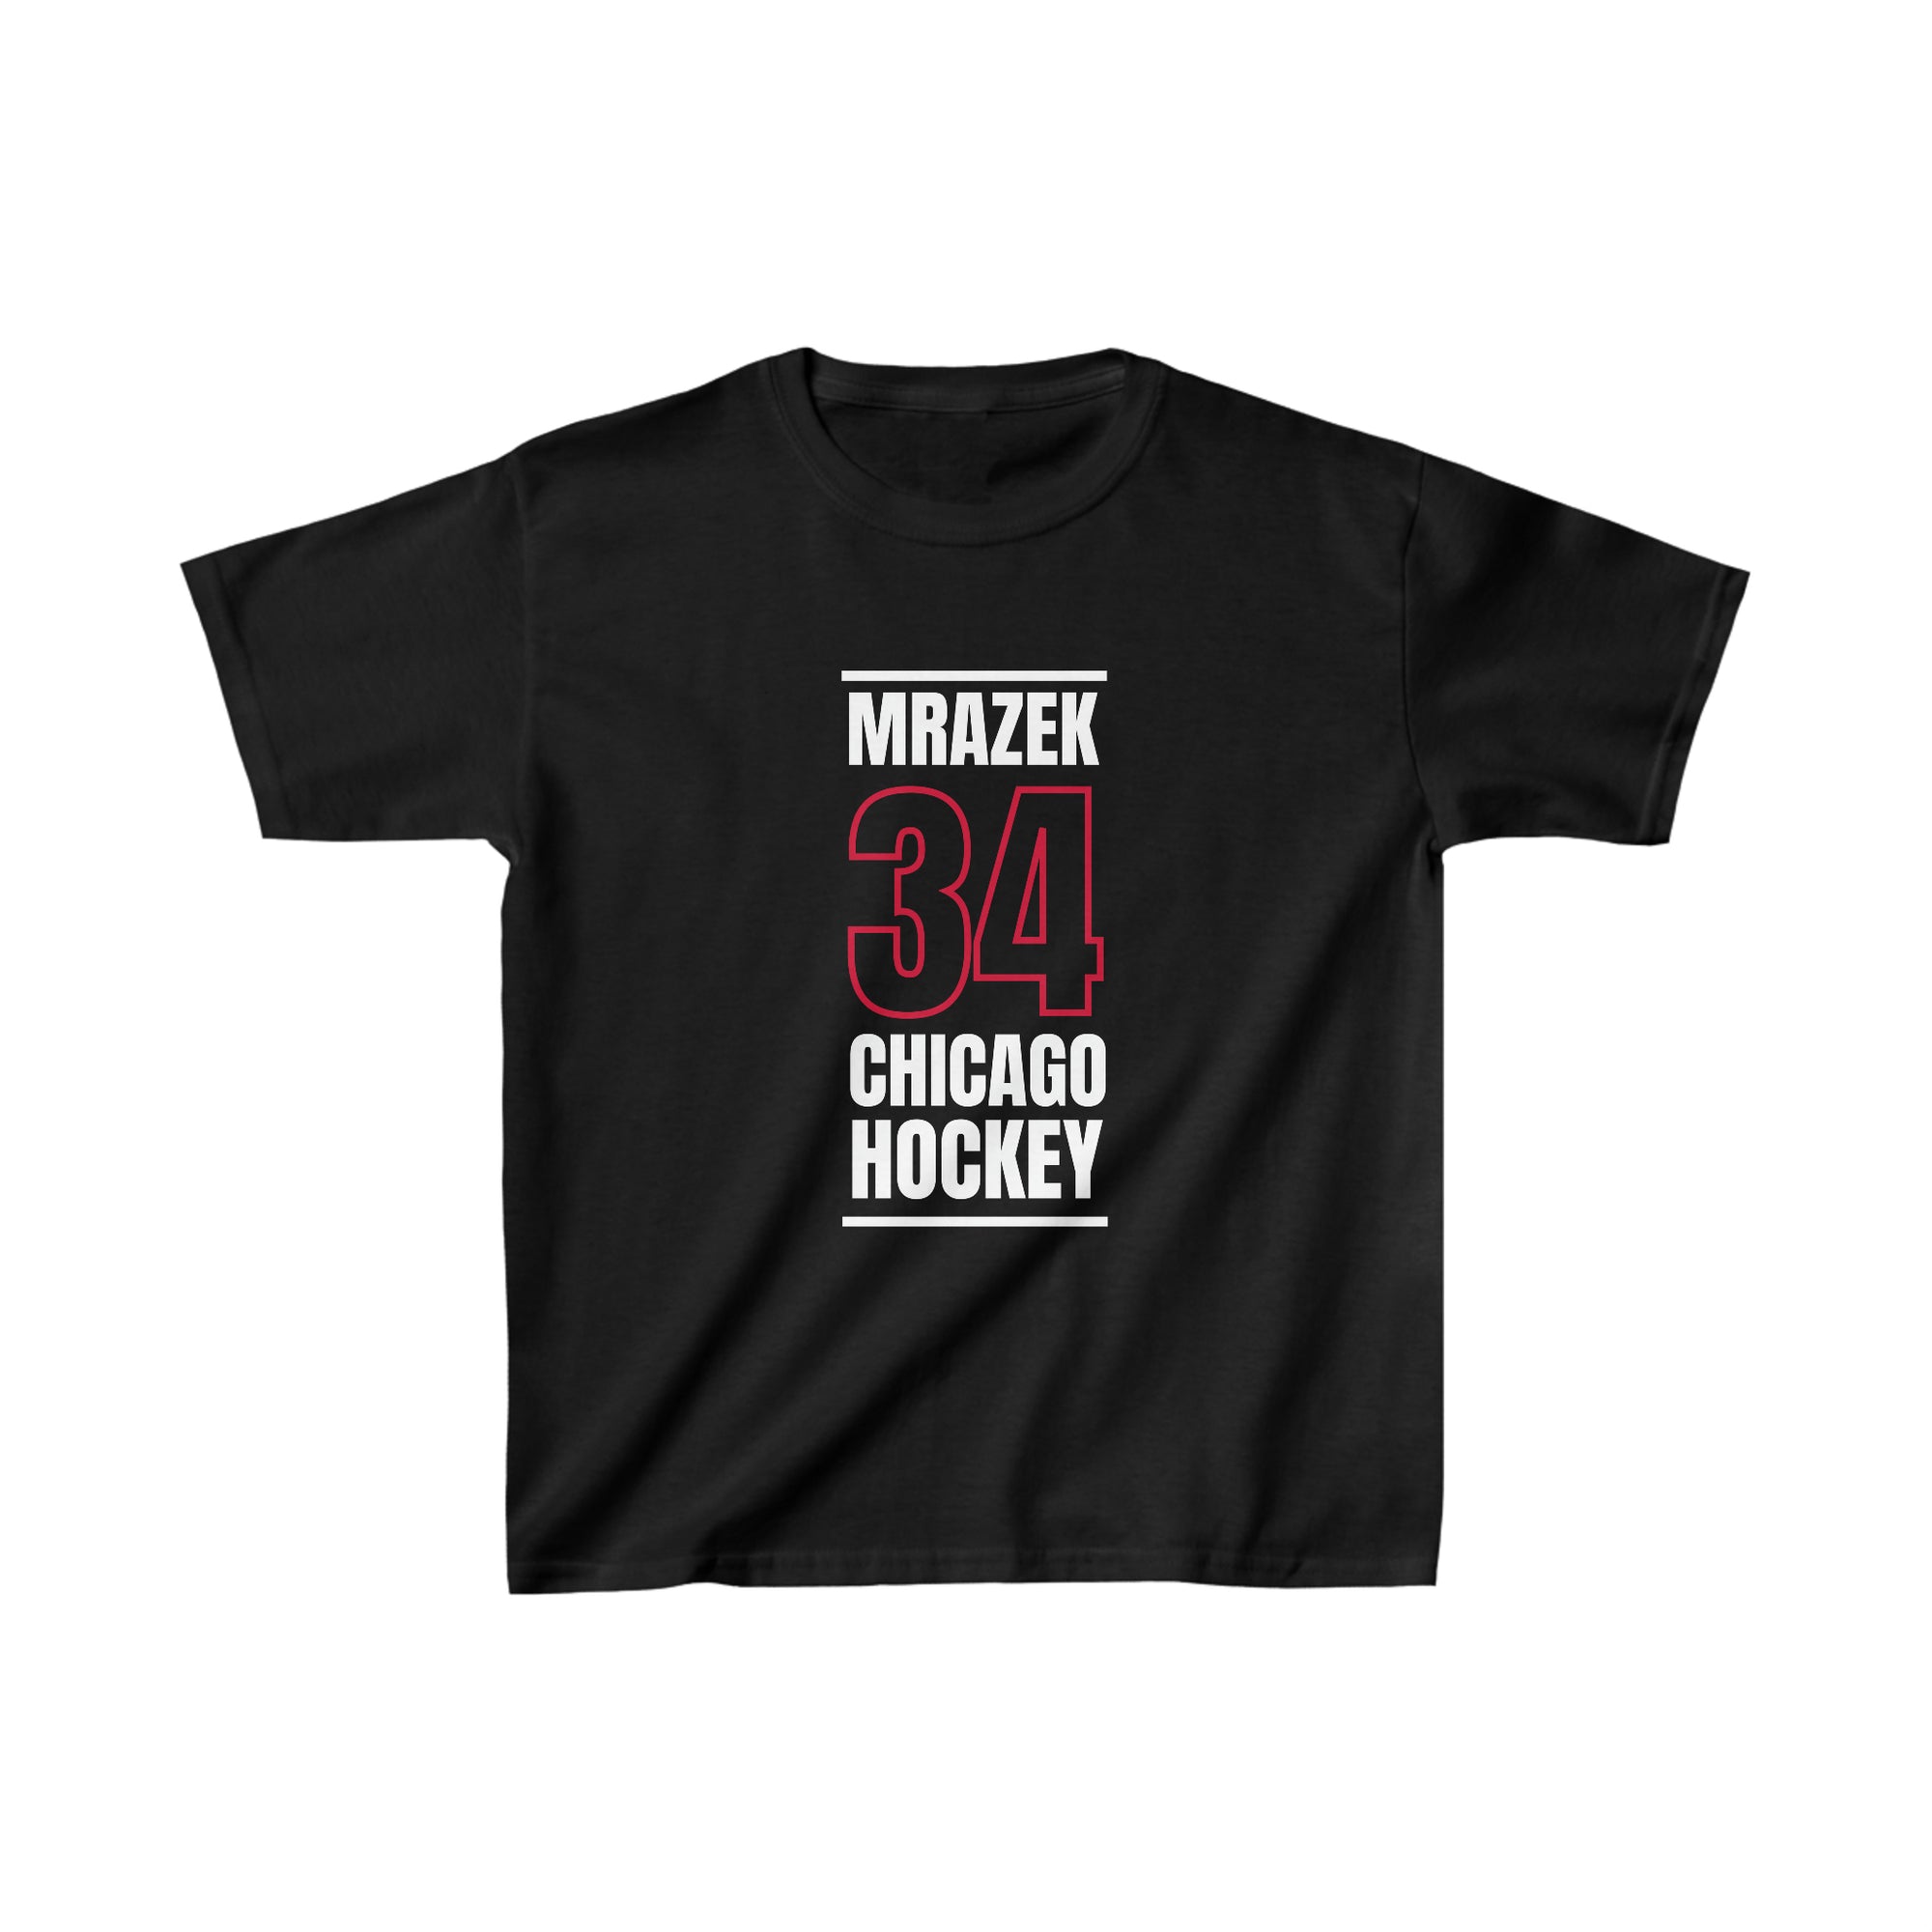 Mrazek 34 Chicago Hockey Black Vertical Design Kids Tee